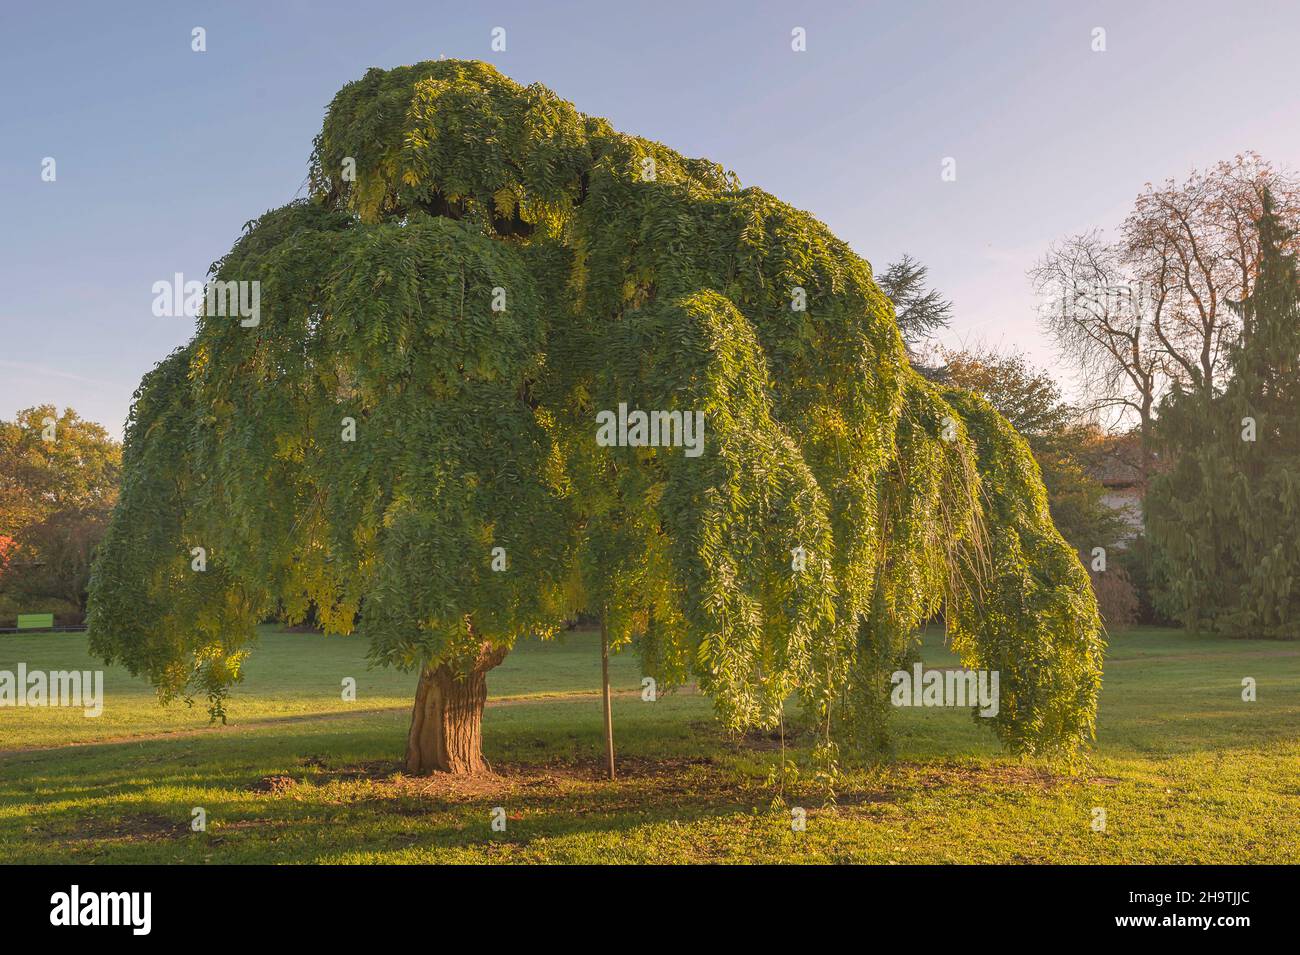 Japanese pagoda tree (Styphnolobium japonicum 'Pendula', Styphnolobium japonicum Pendula, Sophora japonica), cultivar Pendula in a park, Germany, Stock Photo